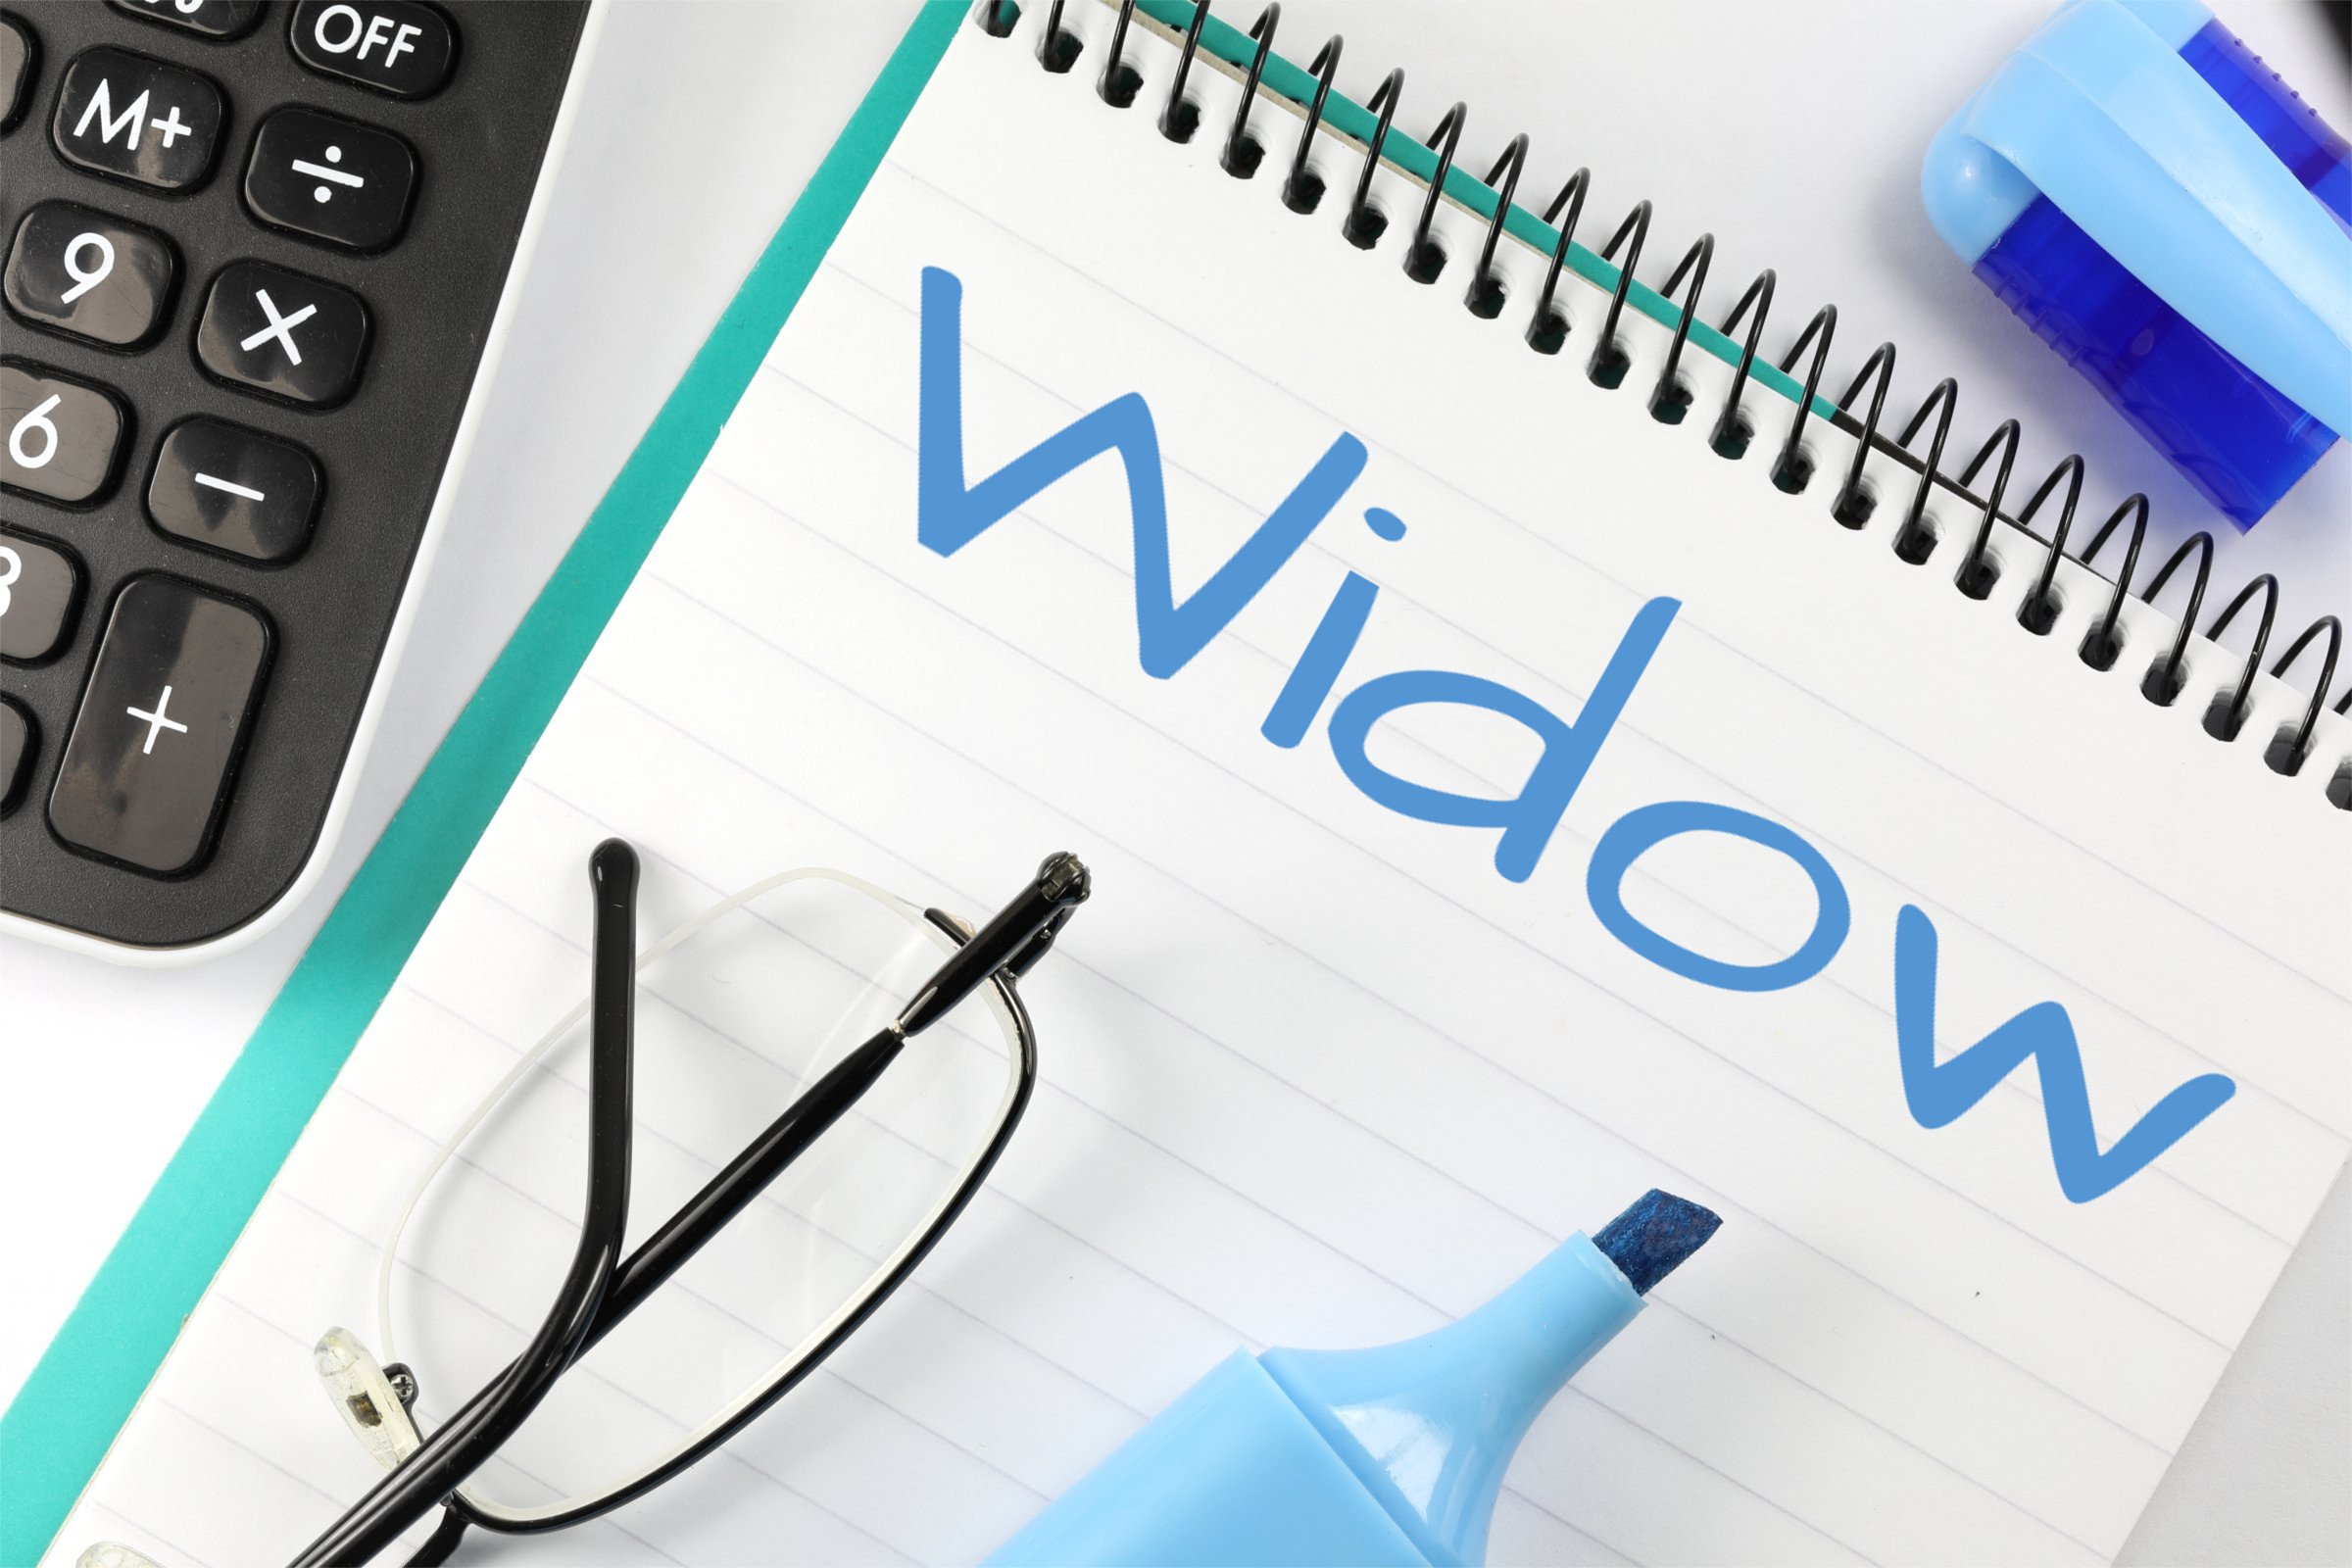 widow